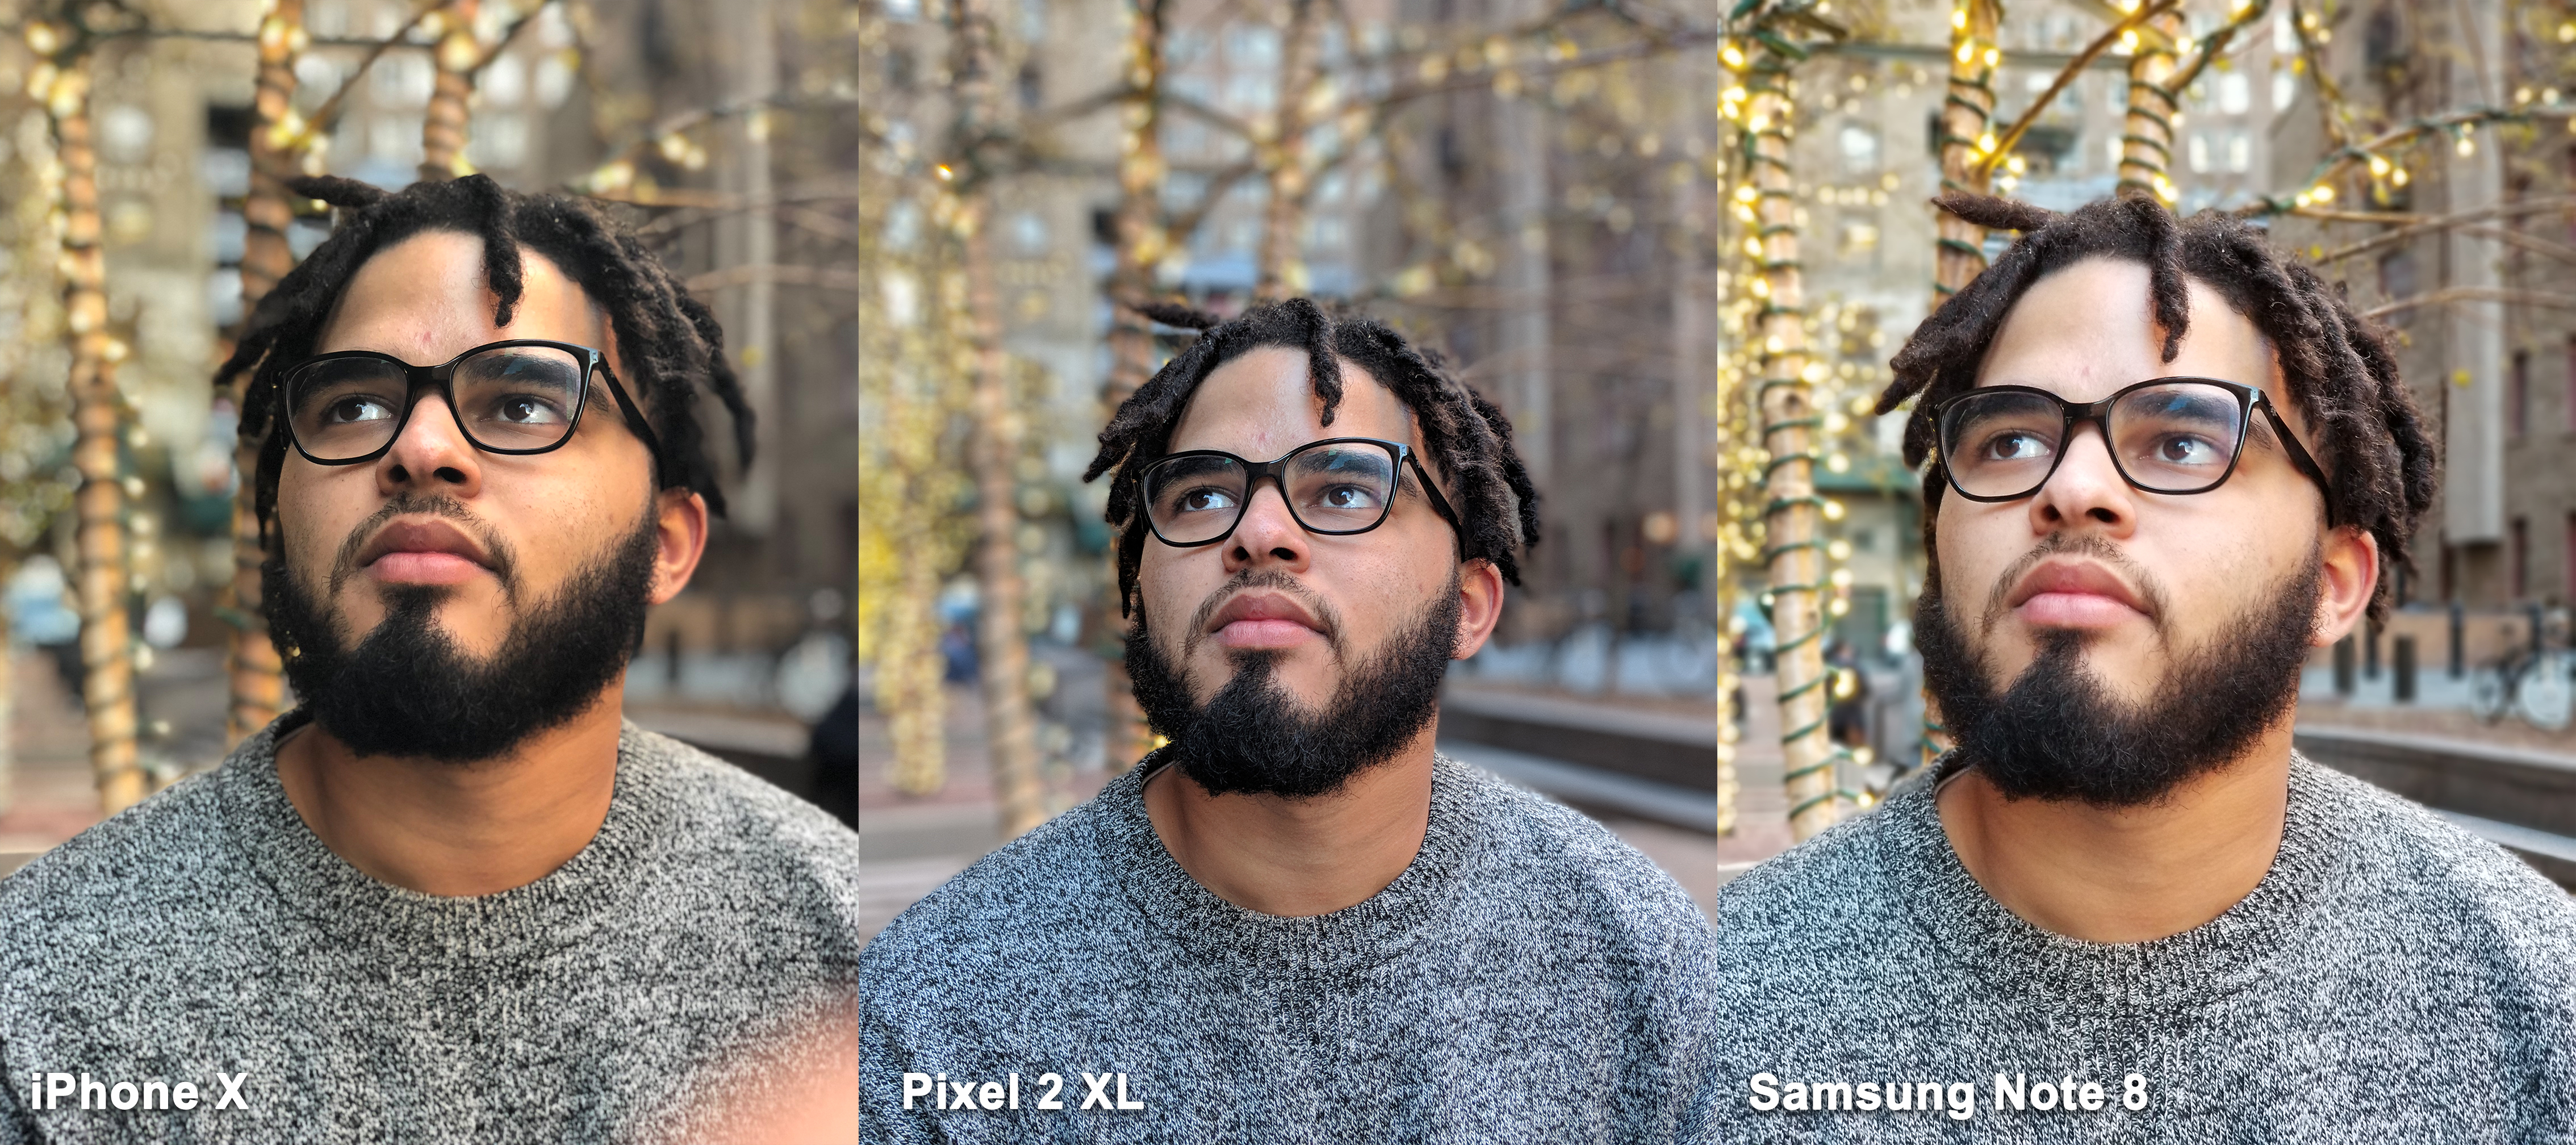 iphone x vs pixel 2 vs note 8